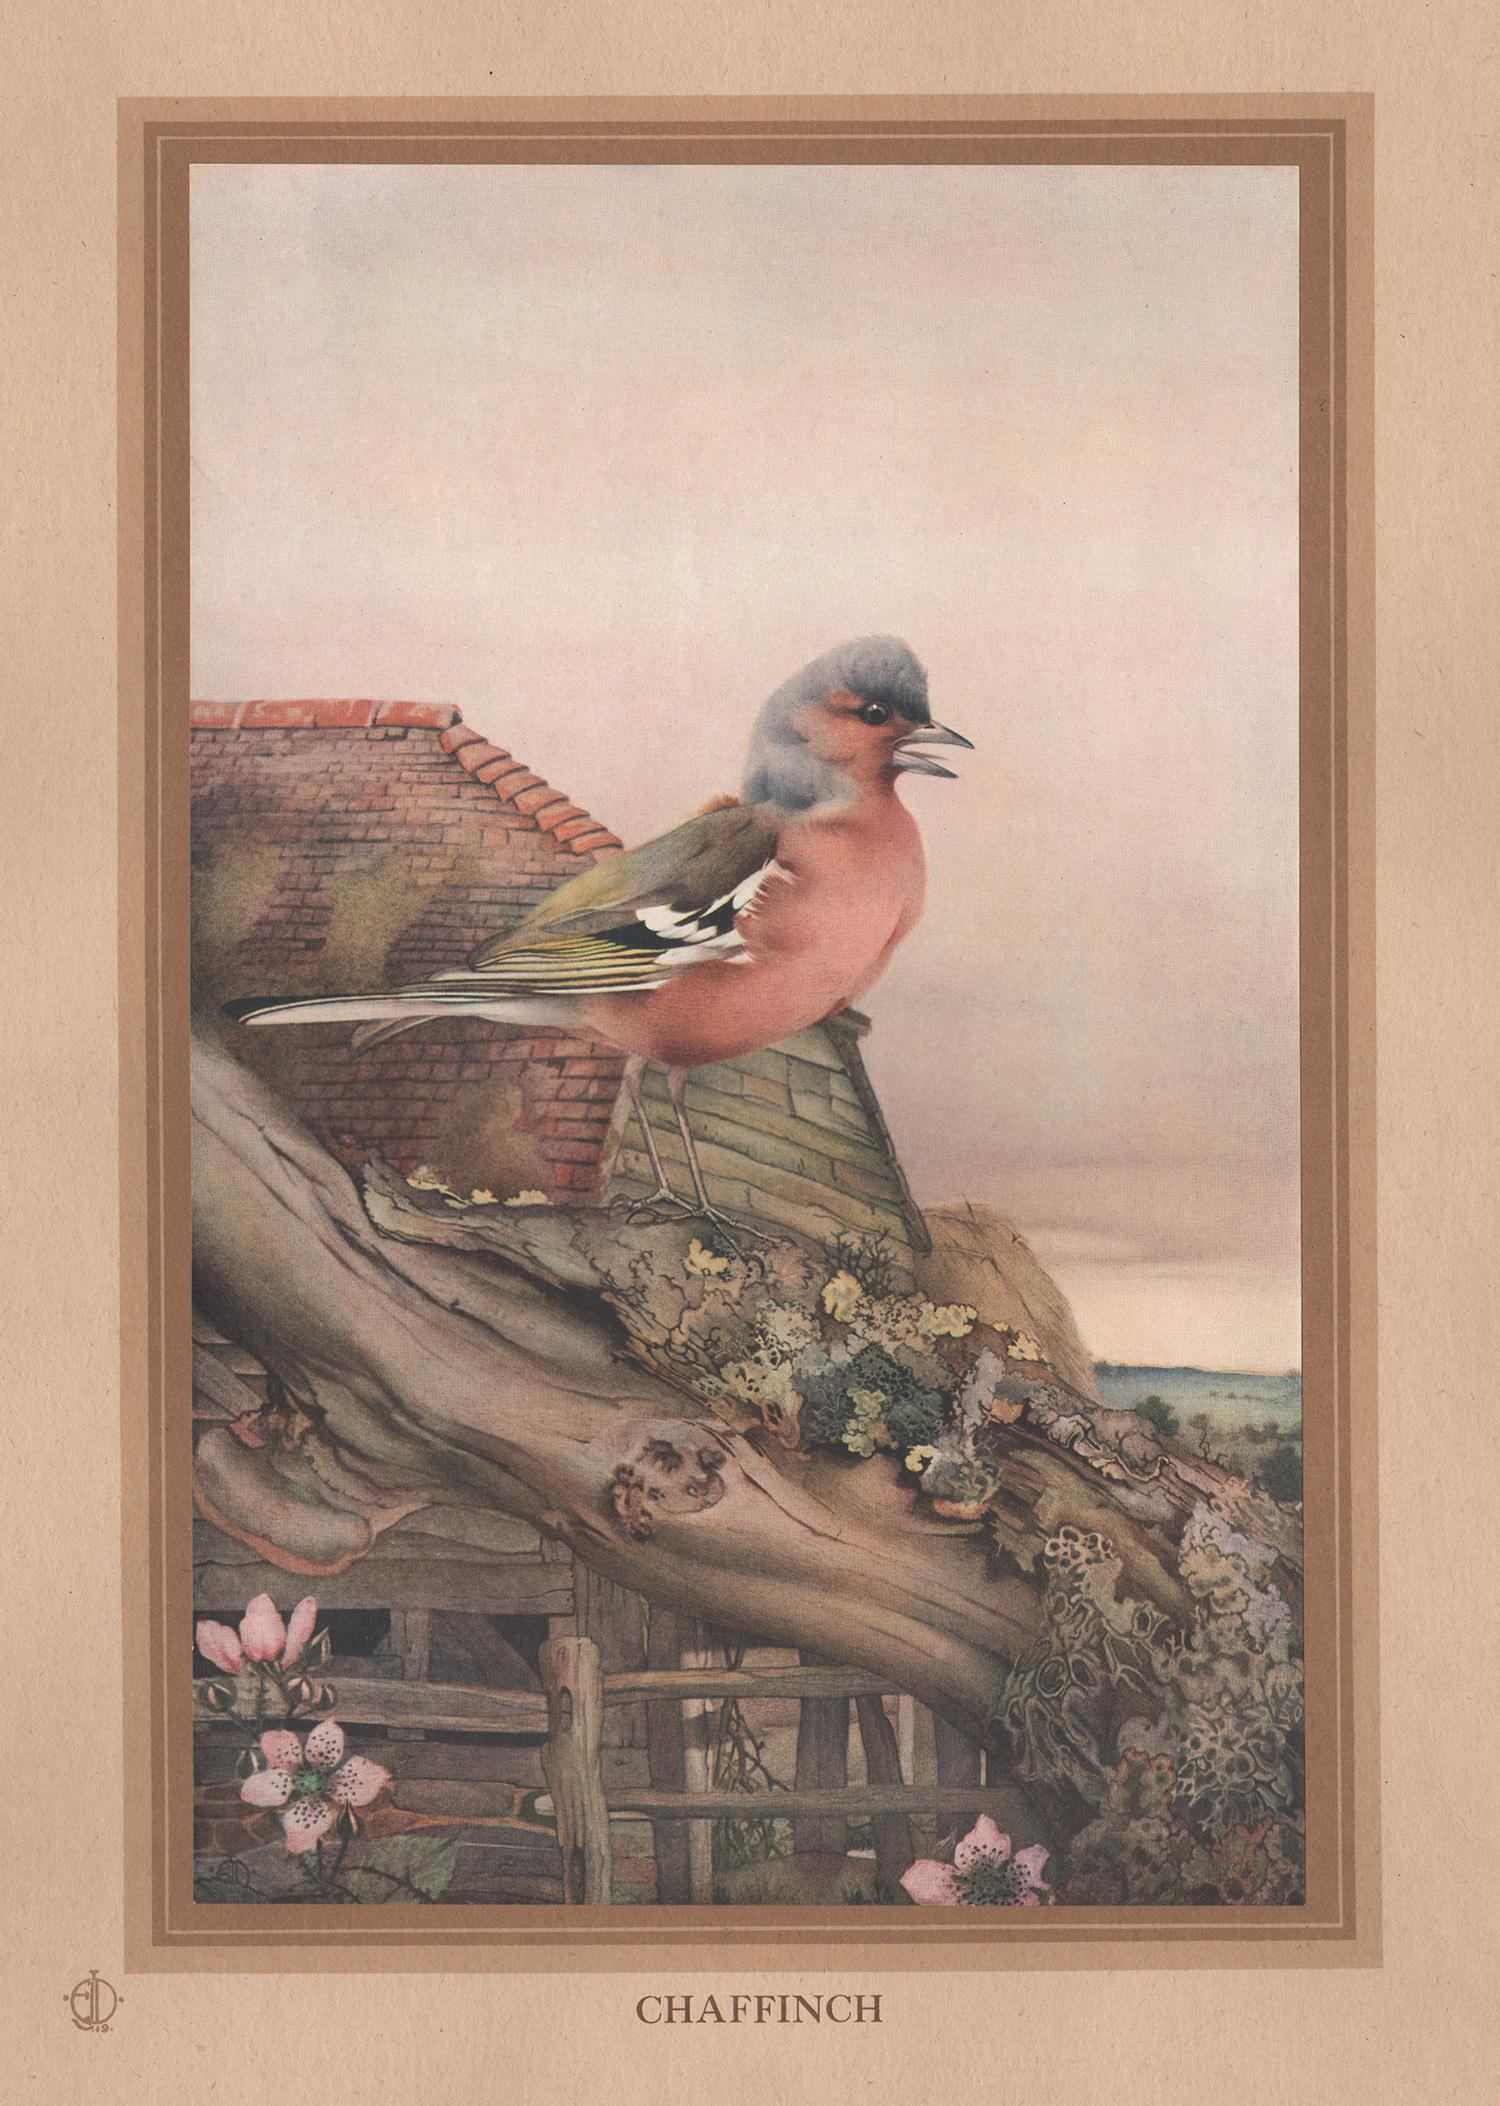 After Edward Detmold Animal Print - 'Chaffinch', English bird print after Edward Detmold, circa 1919